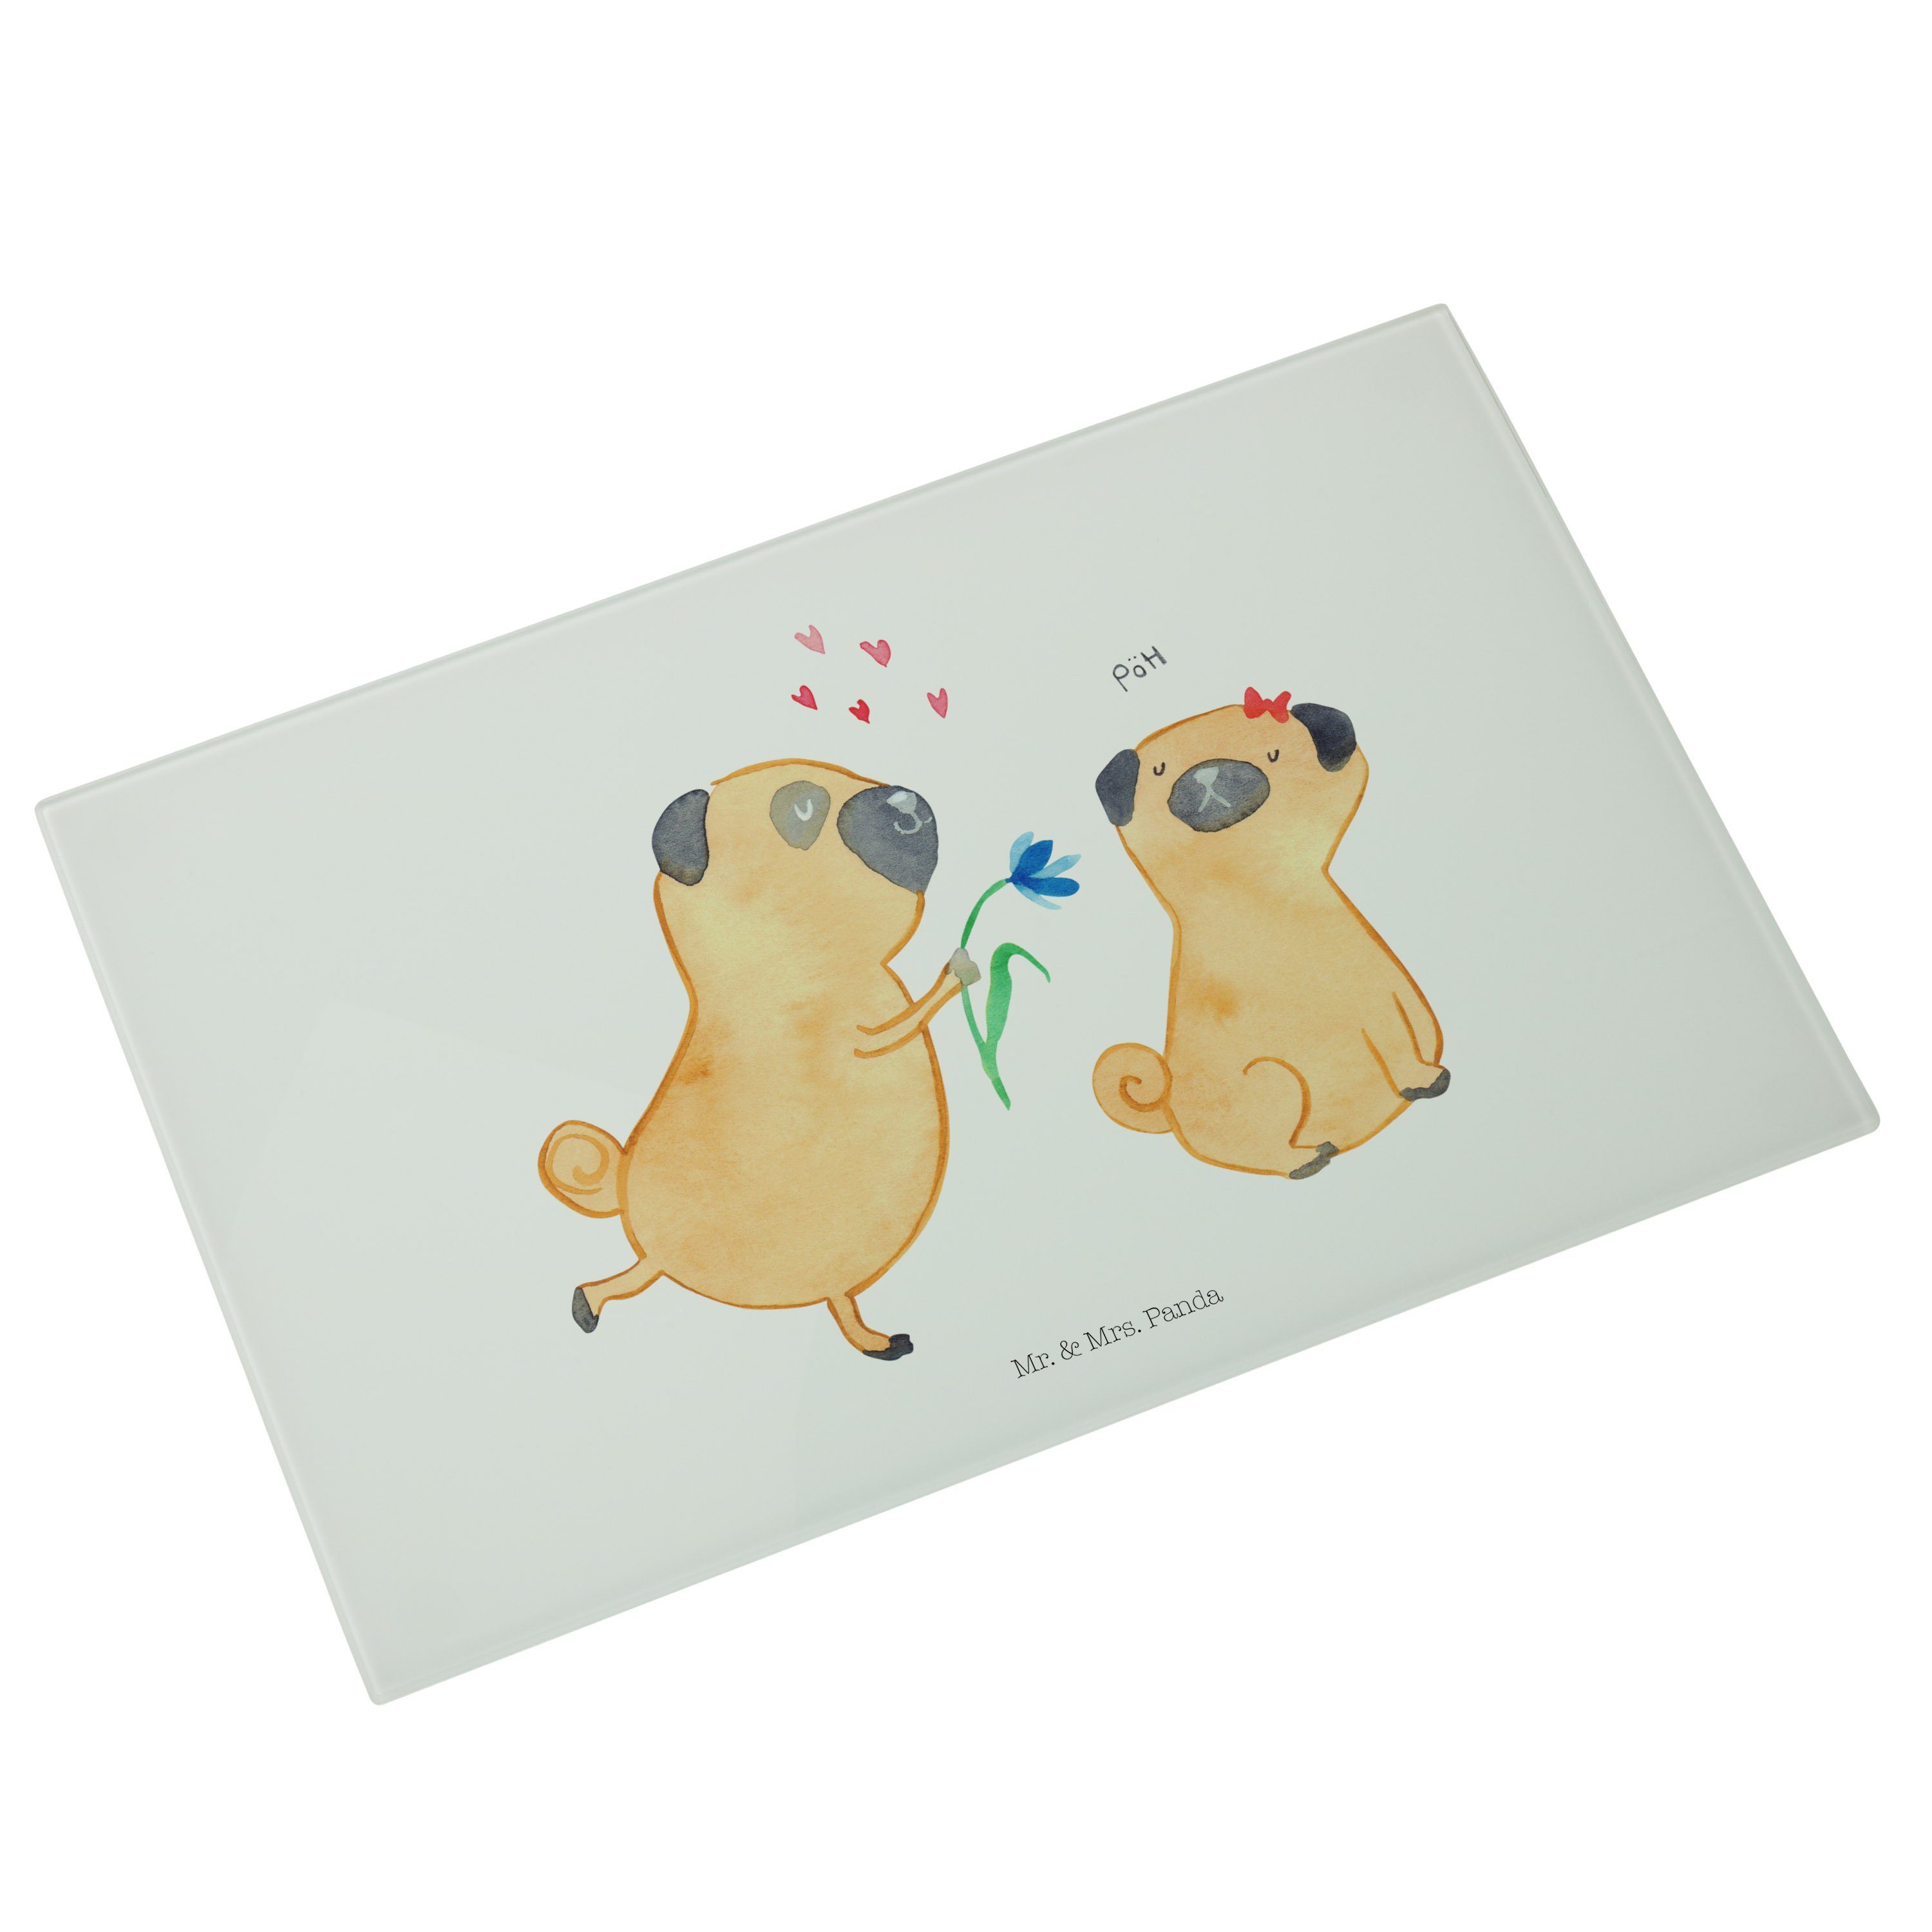 Mr. & Mrs. Geschenk, verliebt Premium Freu, Geschenk Glas, (1-St) - Panda Liebesspruch. Mops Weiß - Verlobt, Servierbrett